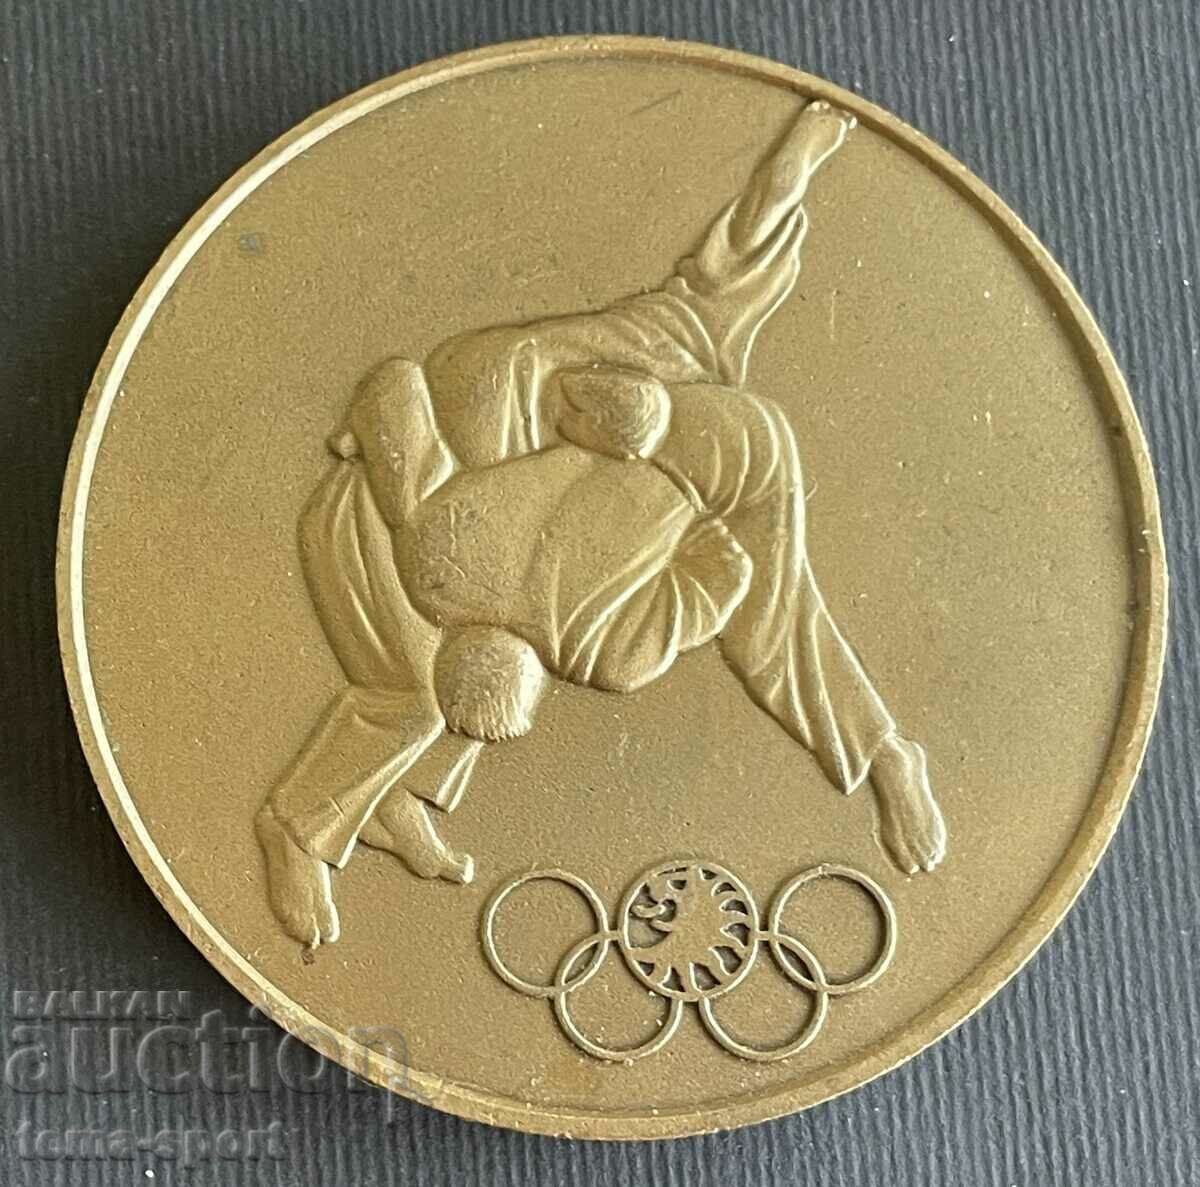 6 България Олимпийски турнир Джудо Ловеч 1983г.